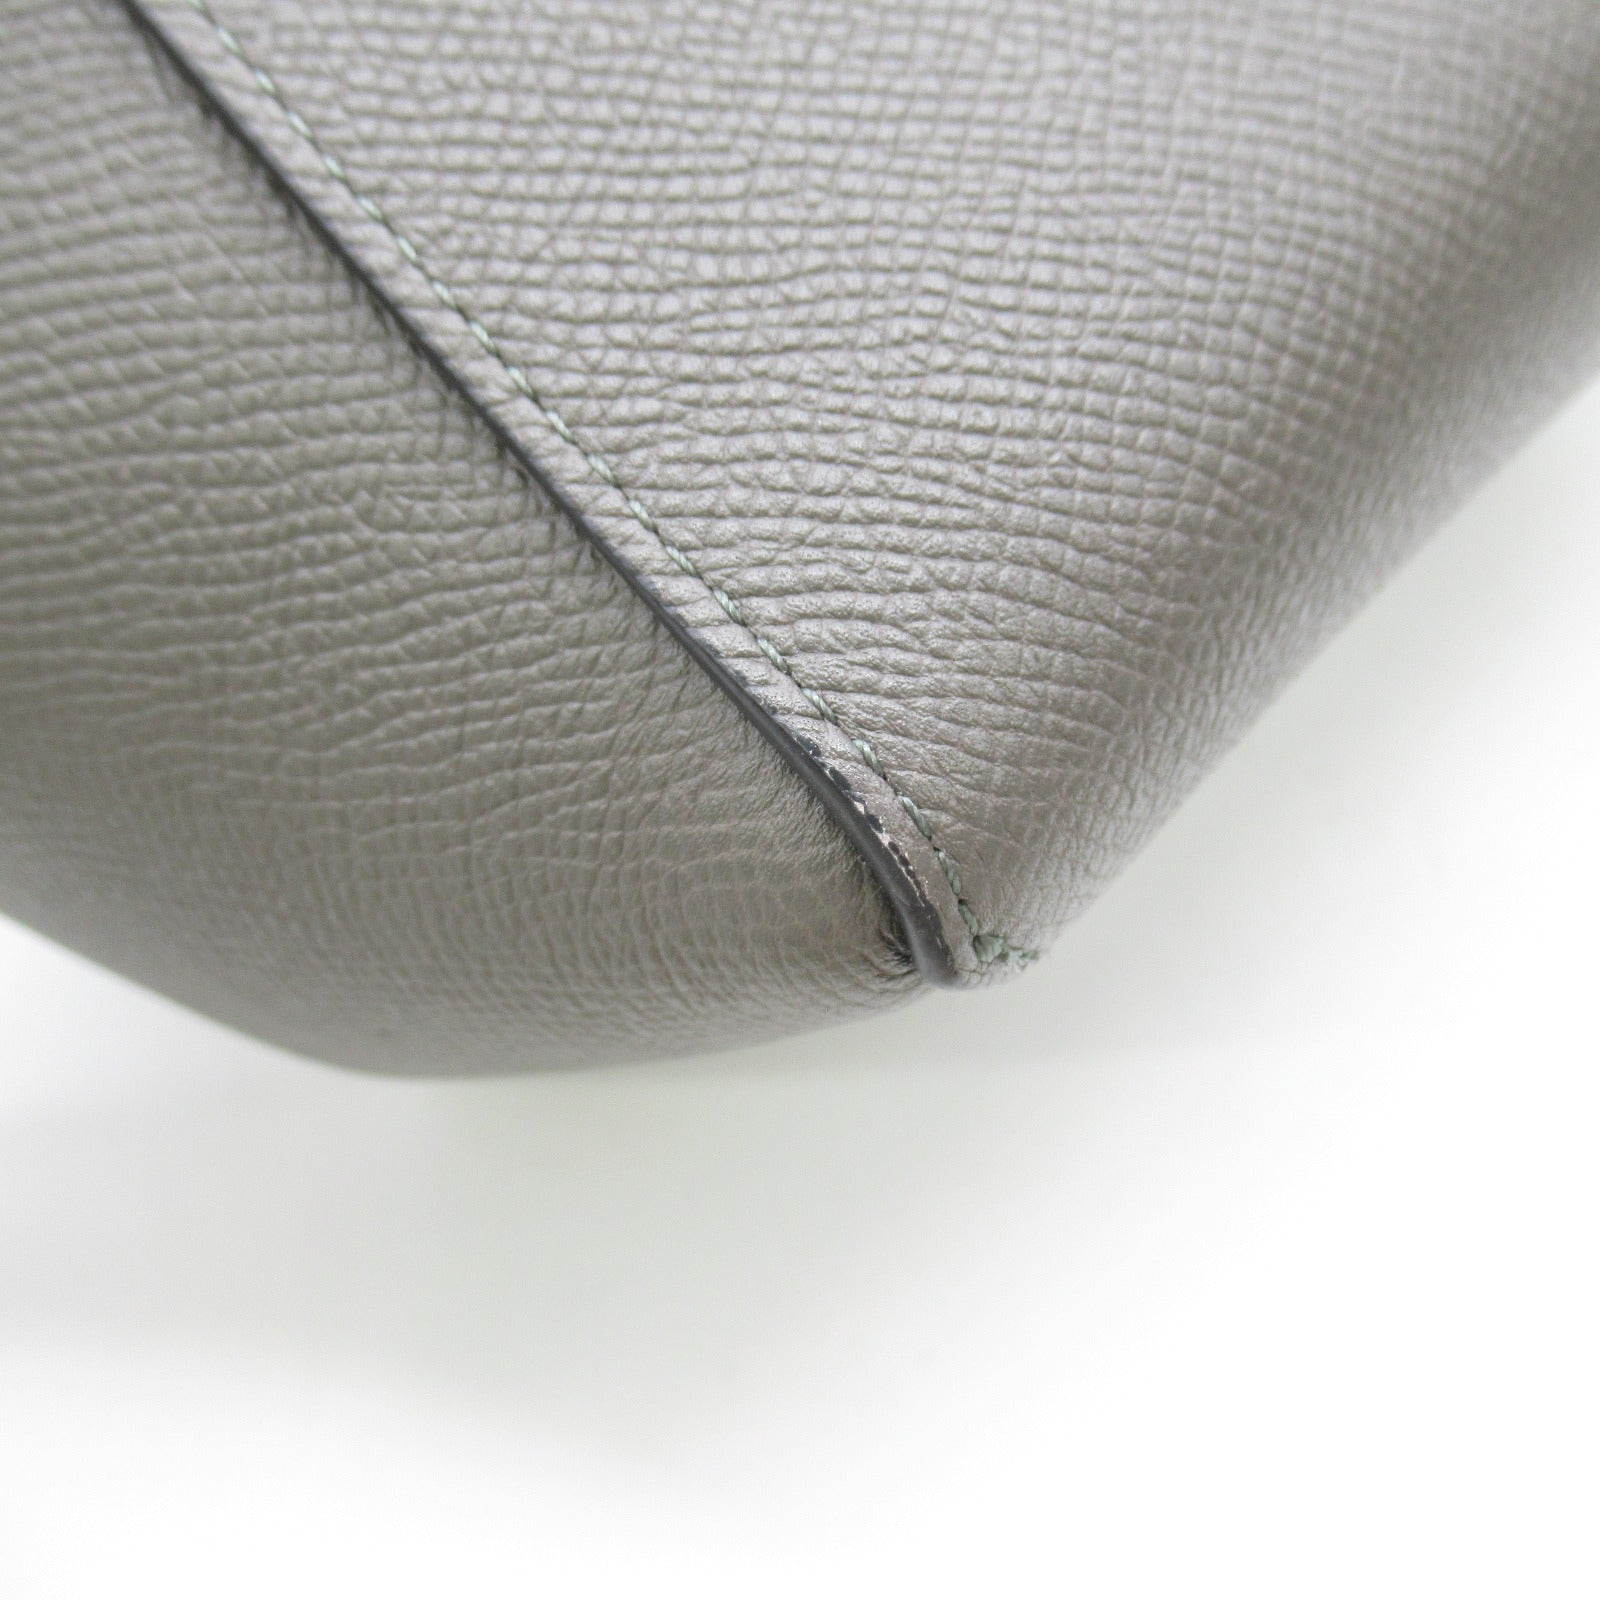 Celine Celline Belt Bag Micro Shoulder Bag  Women's Grey Chakol Grey 185003ZVA